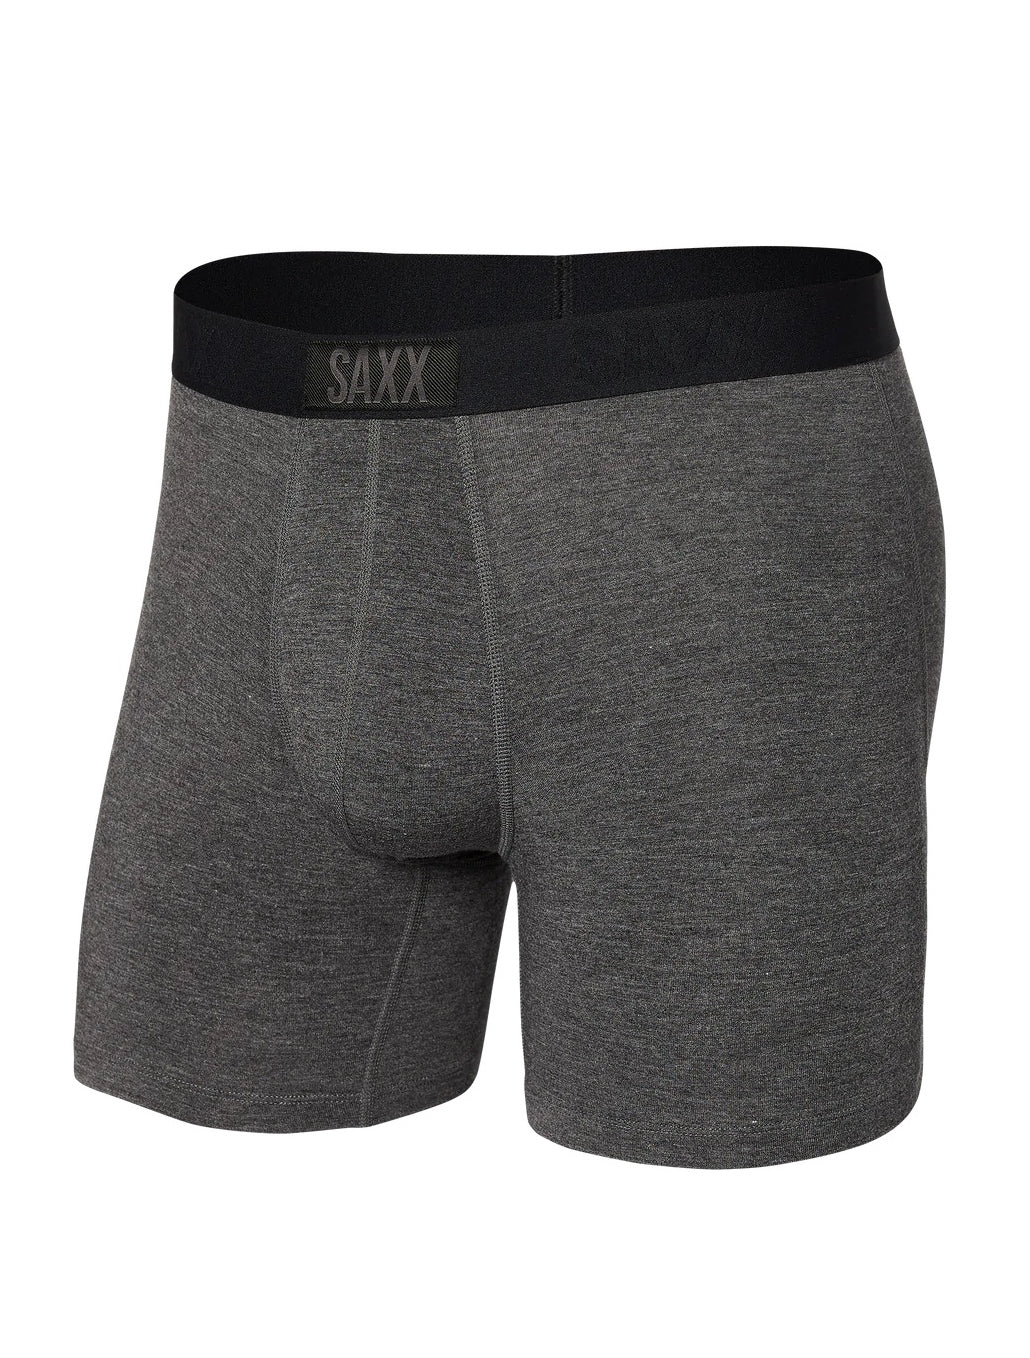 Men's Vibe Boxer Brief, Saxx Underwear